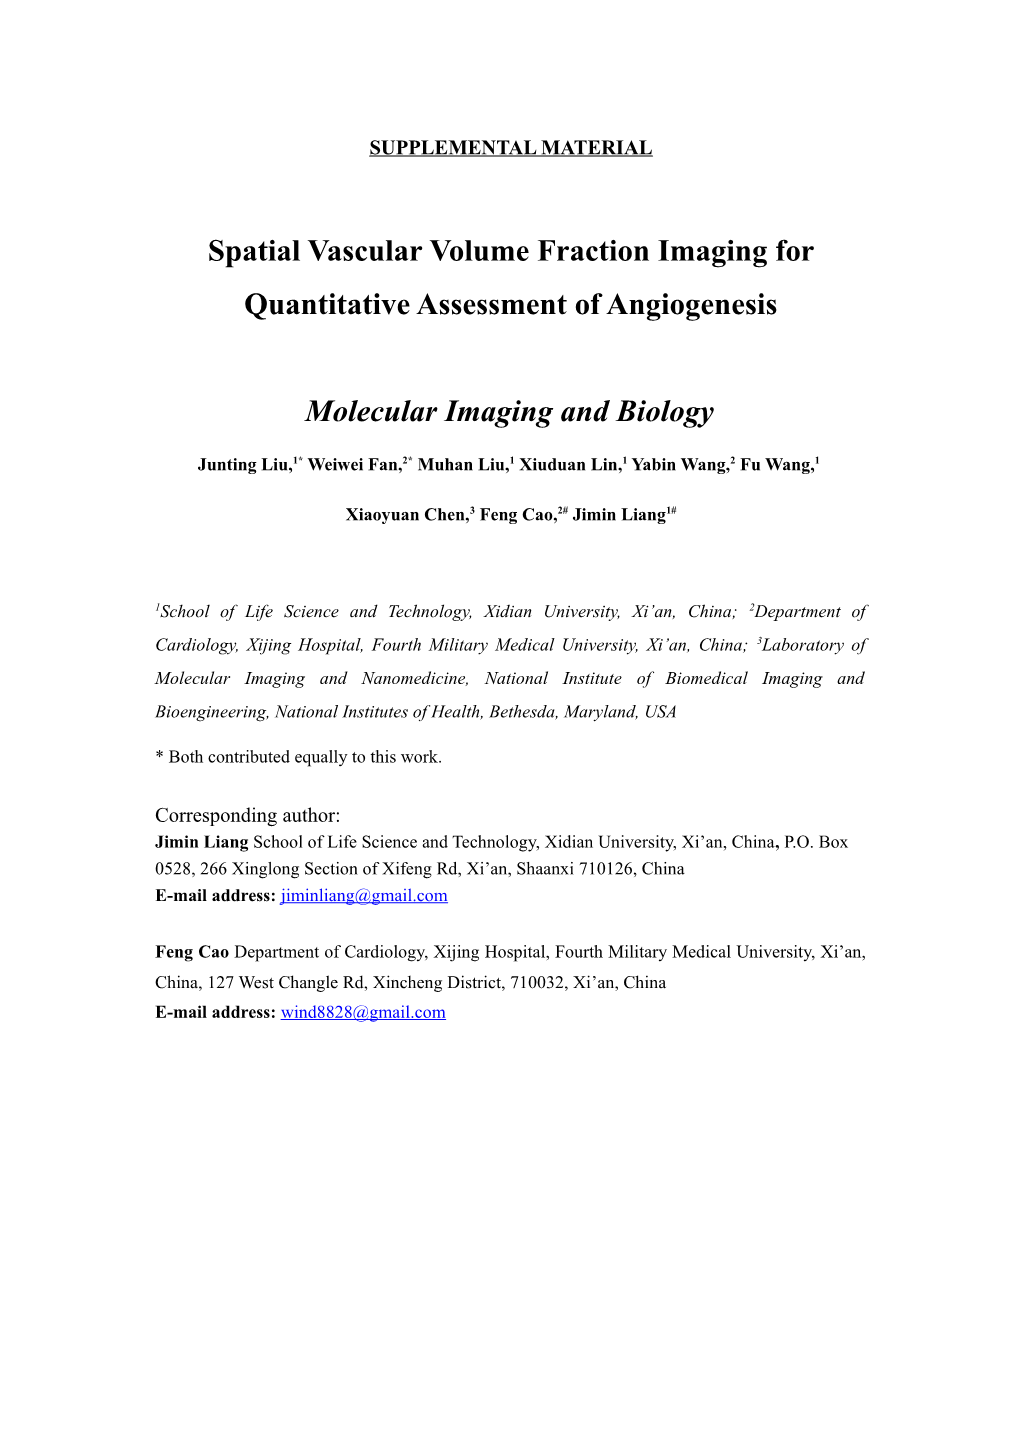 Spatialvascular Volume Fraction Imaging for Quantitative Assessment of Angiogenesis